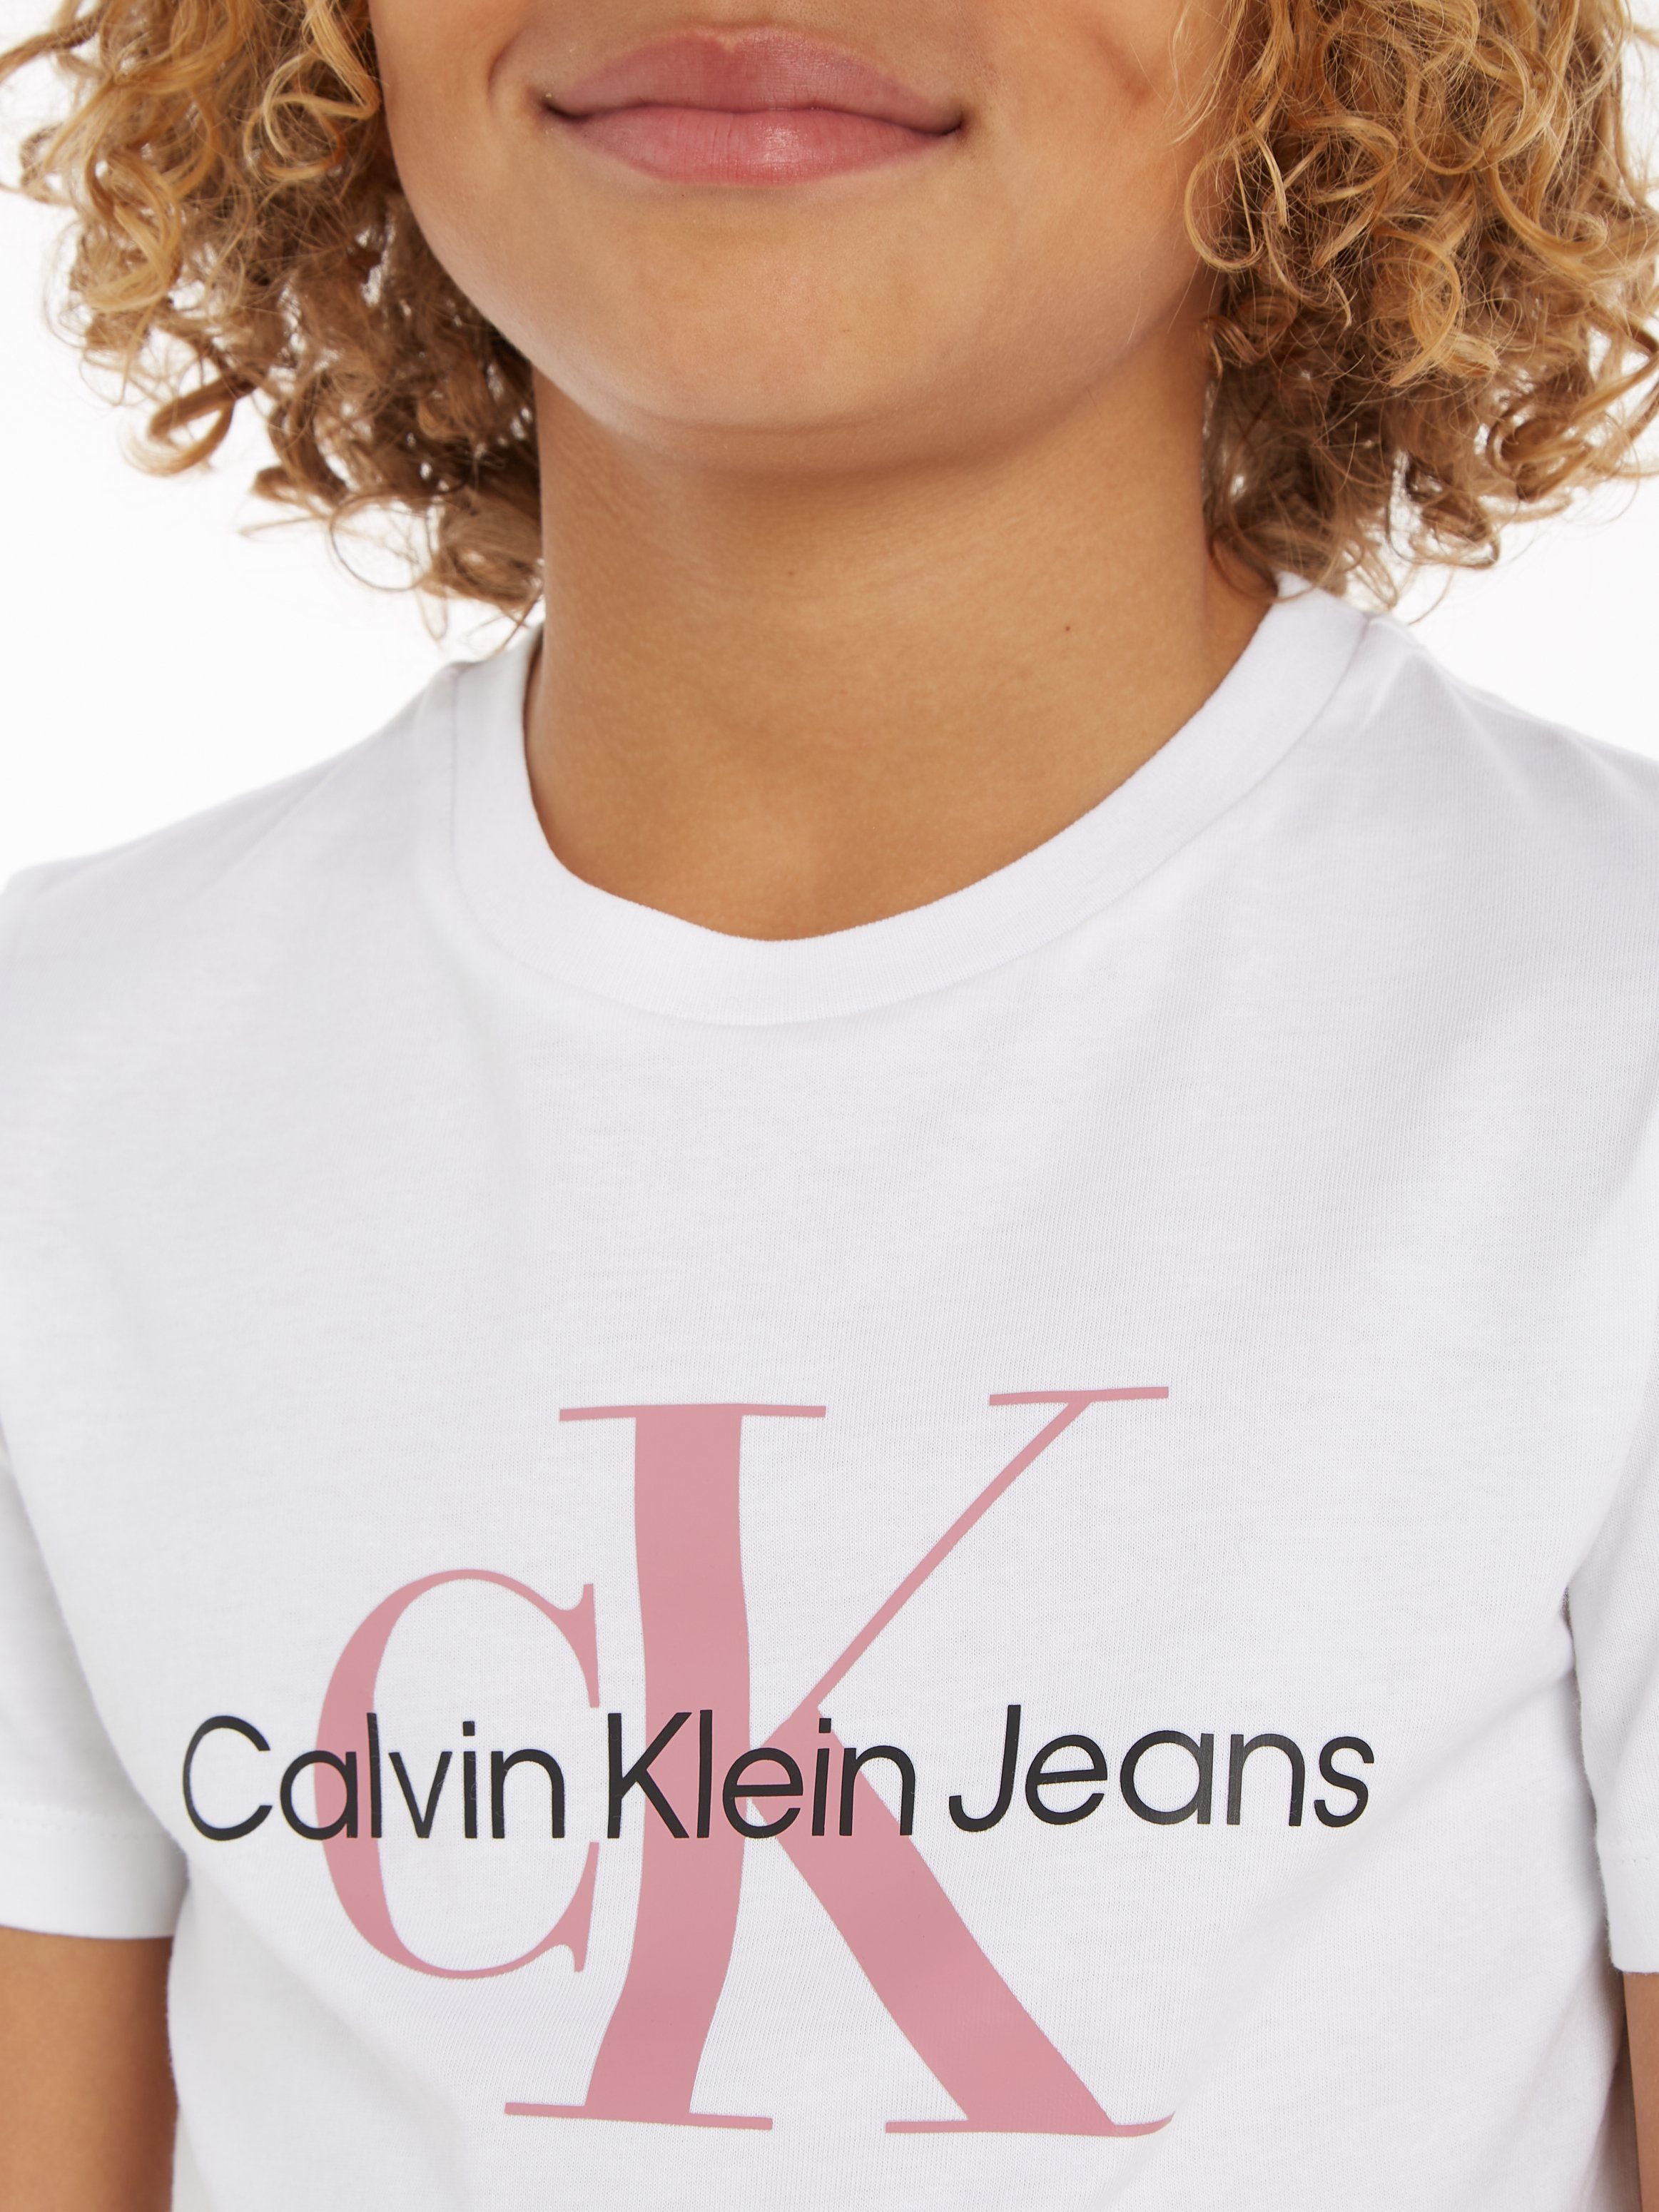 MONOGRAM SS Calvin CK White T-Shirt Jeans T-SHIRT Klein Bright